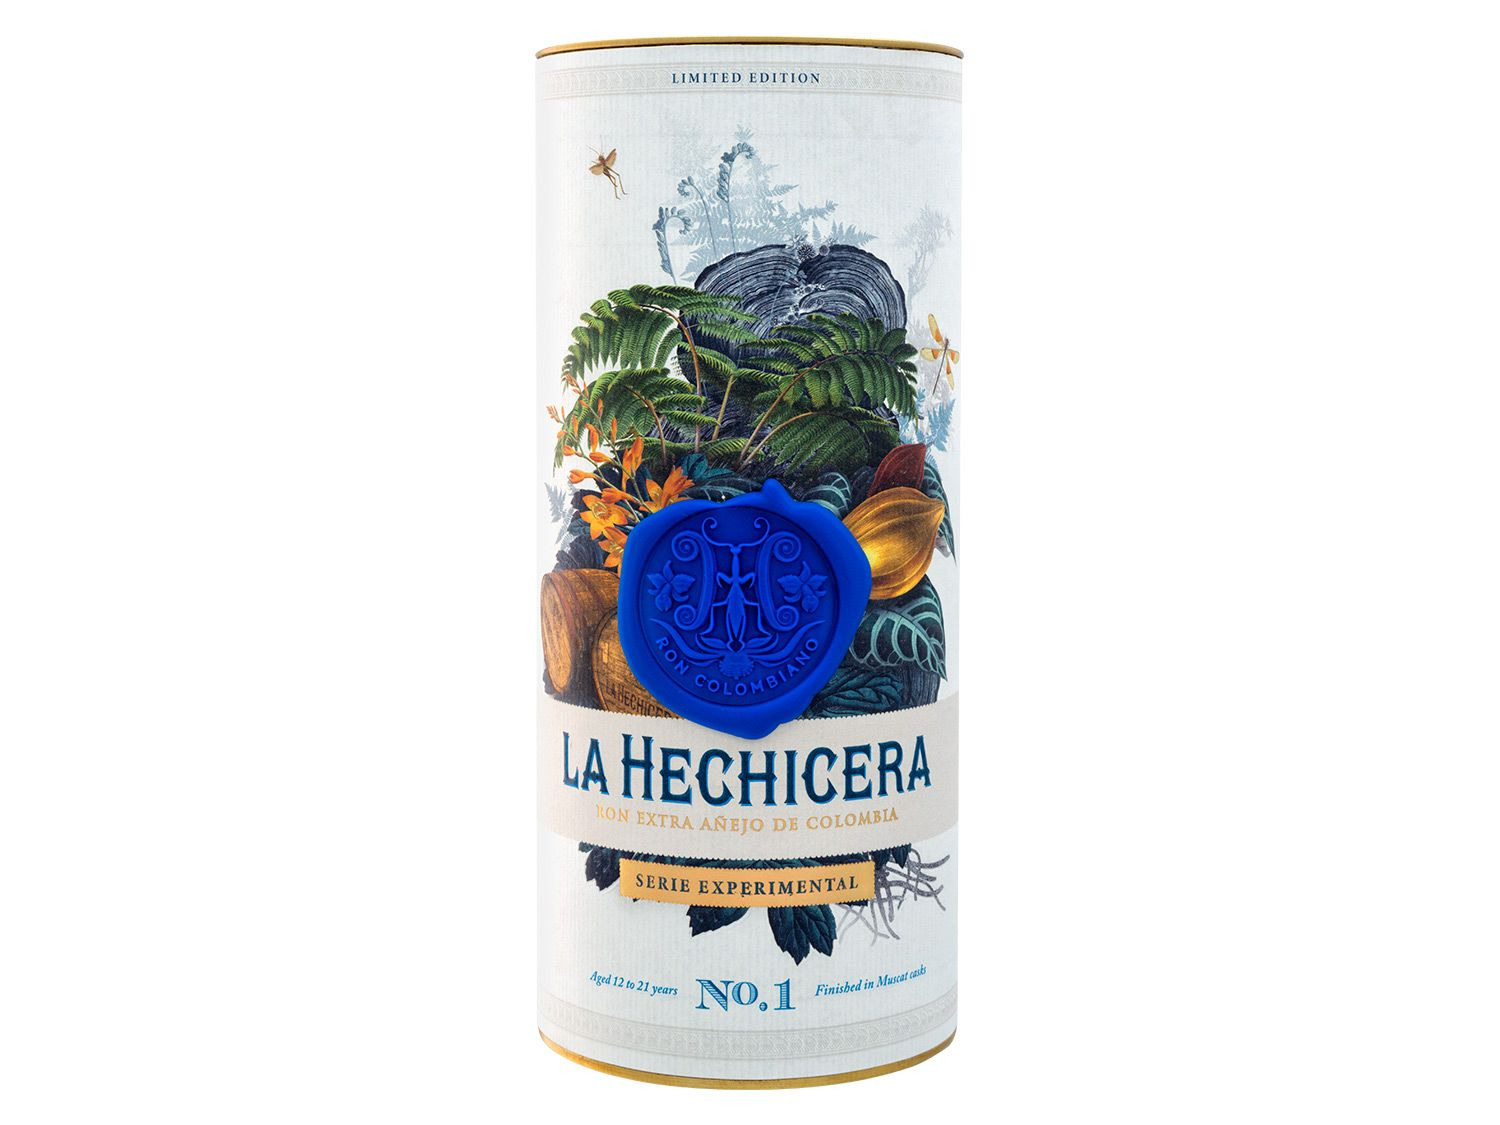 Hechicera Geschenk… No. mit Serie 1 Rum La Experimental